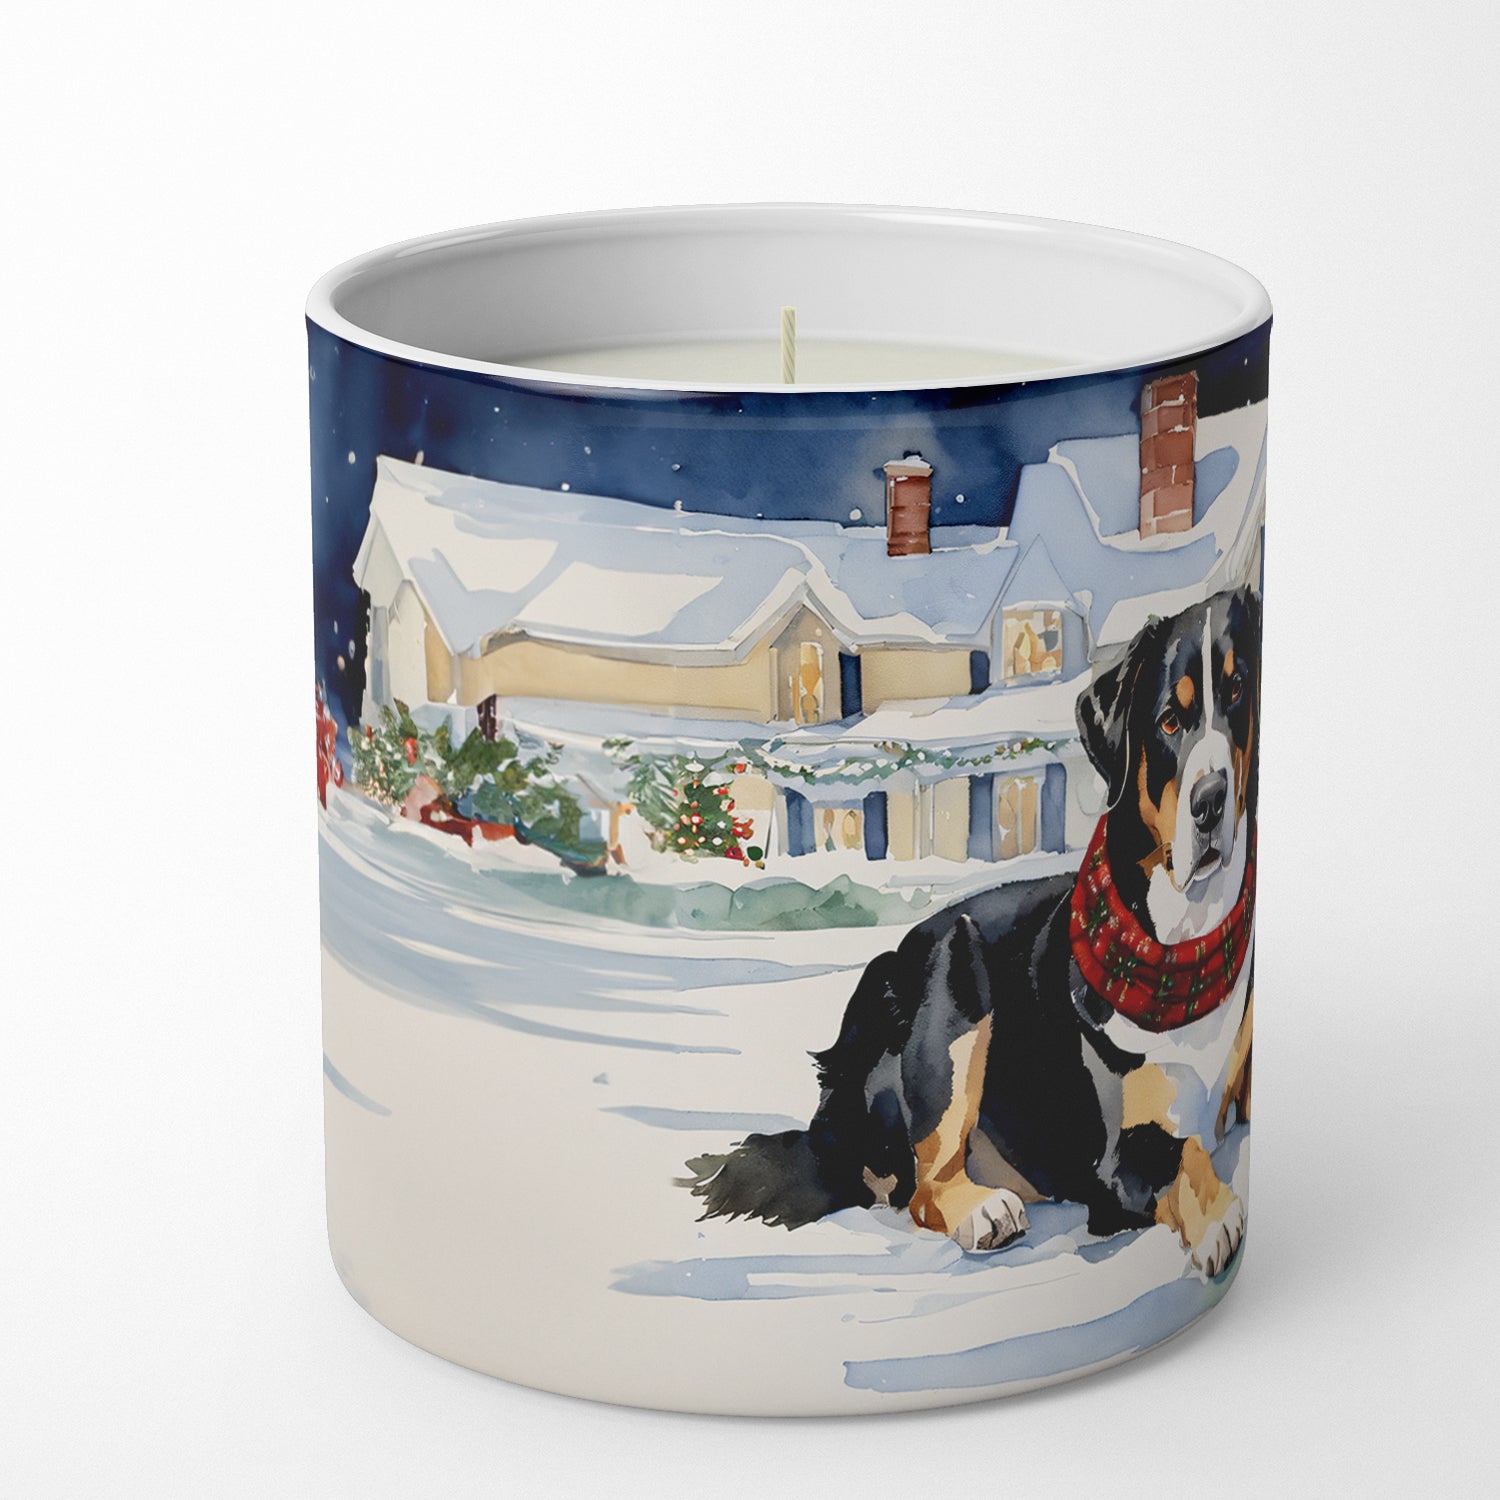 Entlebucher Mountain Dog Cozy Christmas Decorative Soy Candle